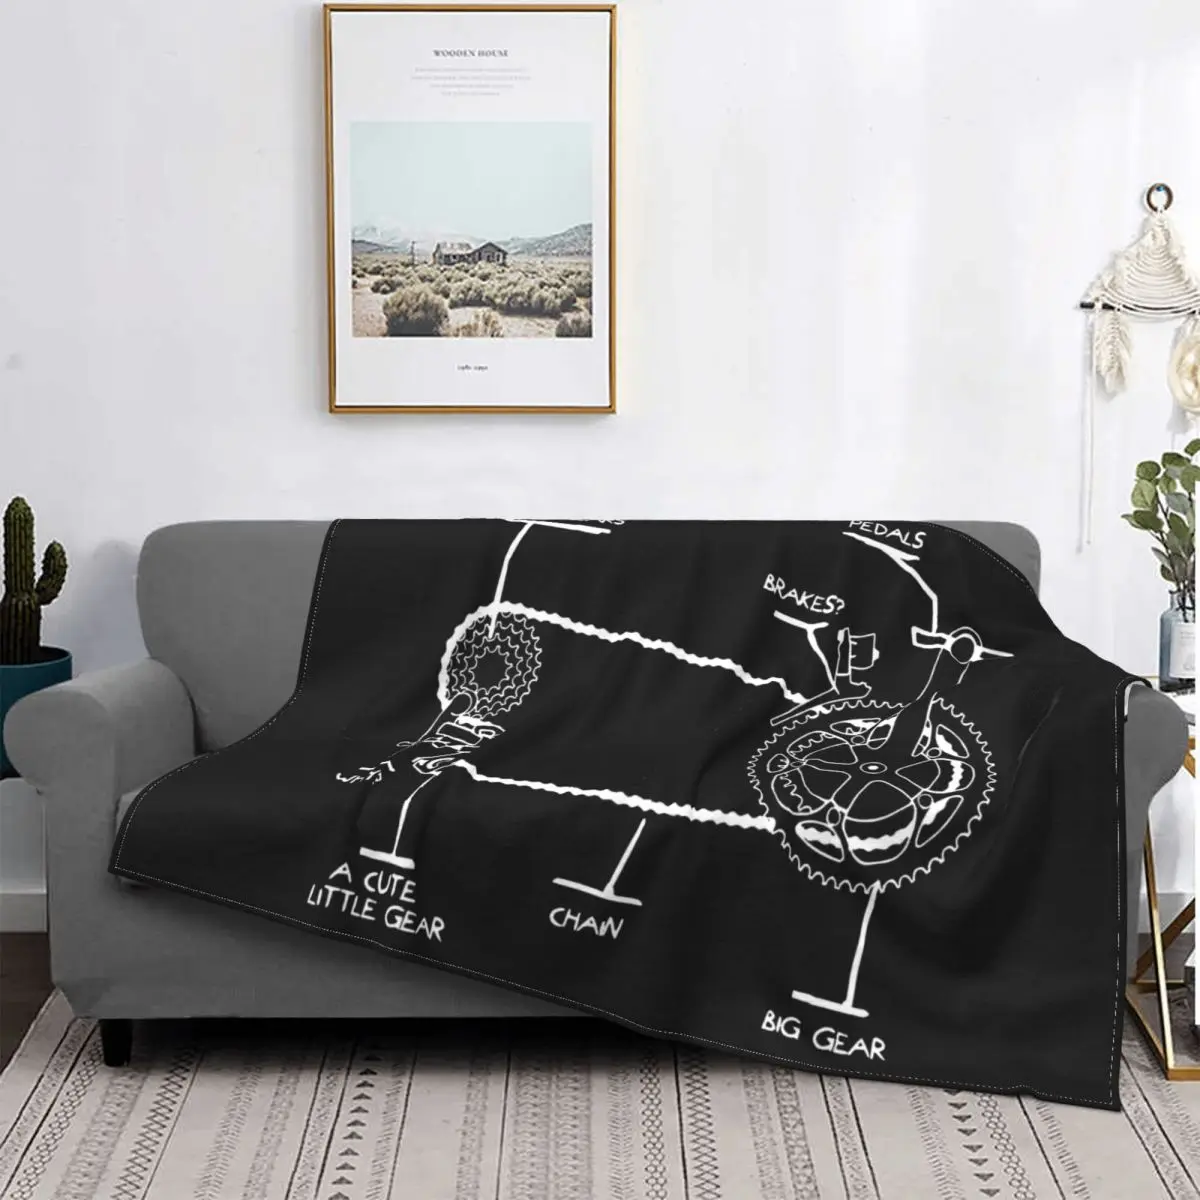 Regalo divertido de cadena de bicicleta, manta de cambio de marchas, colcha de cama, fundas de sofá, colcha de verano